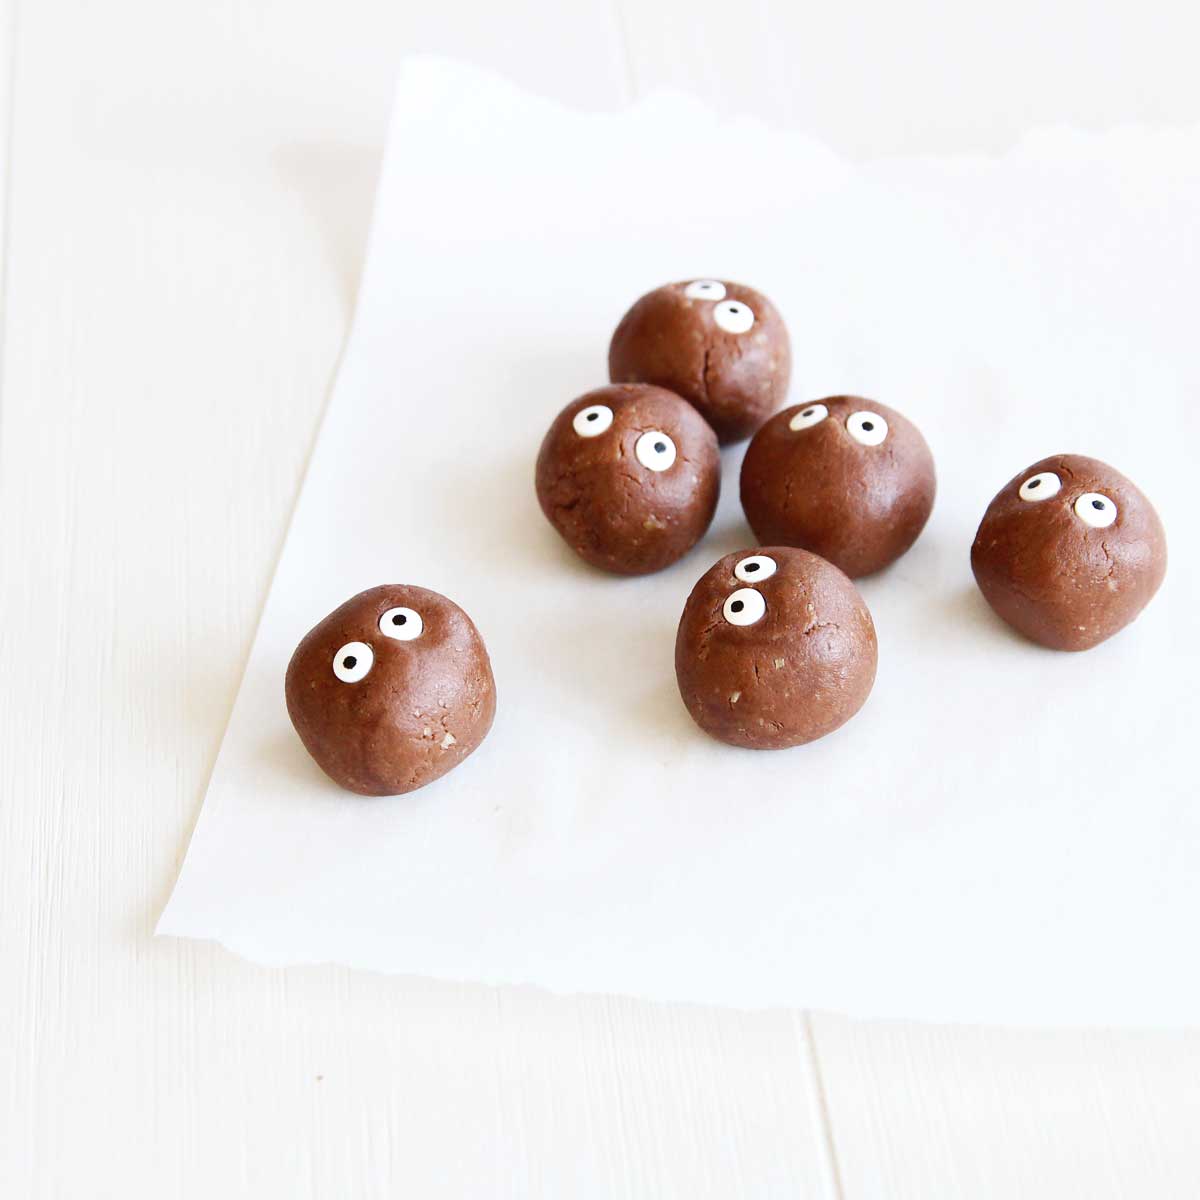 Soot Spirit Chocolate Protein Balls for Halloween (no-bake, Vegan recipe) - Ricotta Almond Easter Eggs